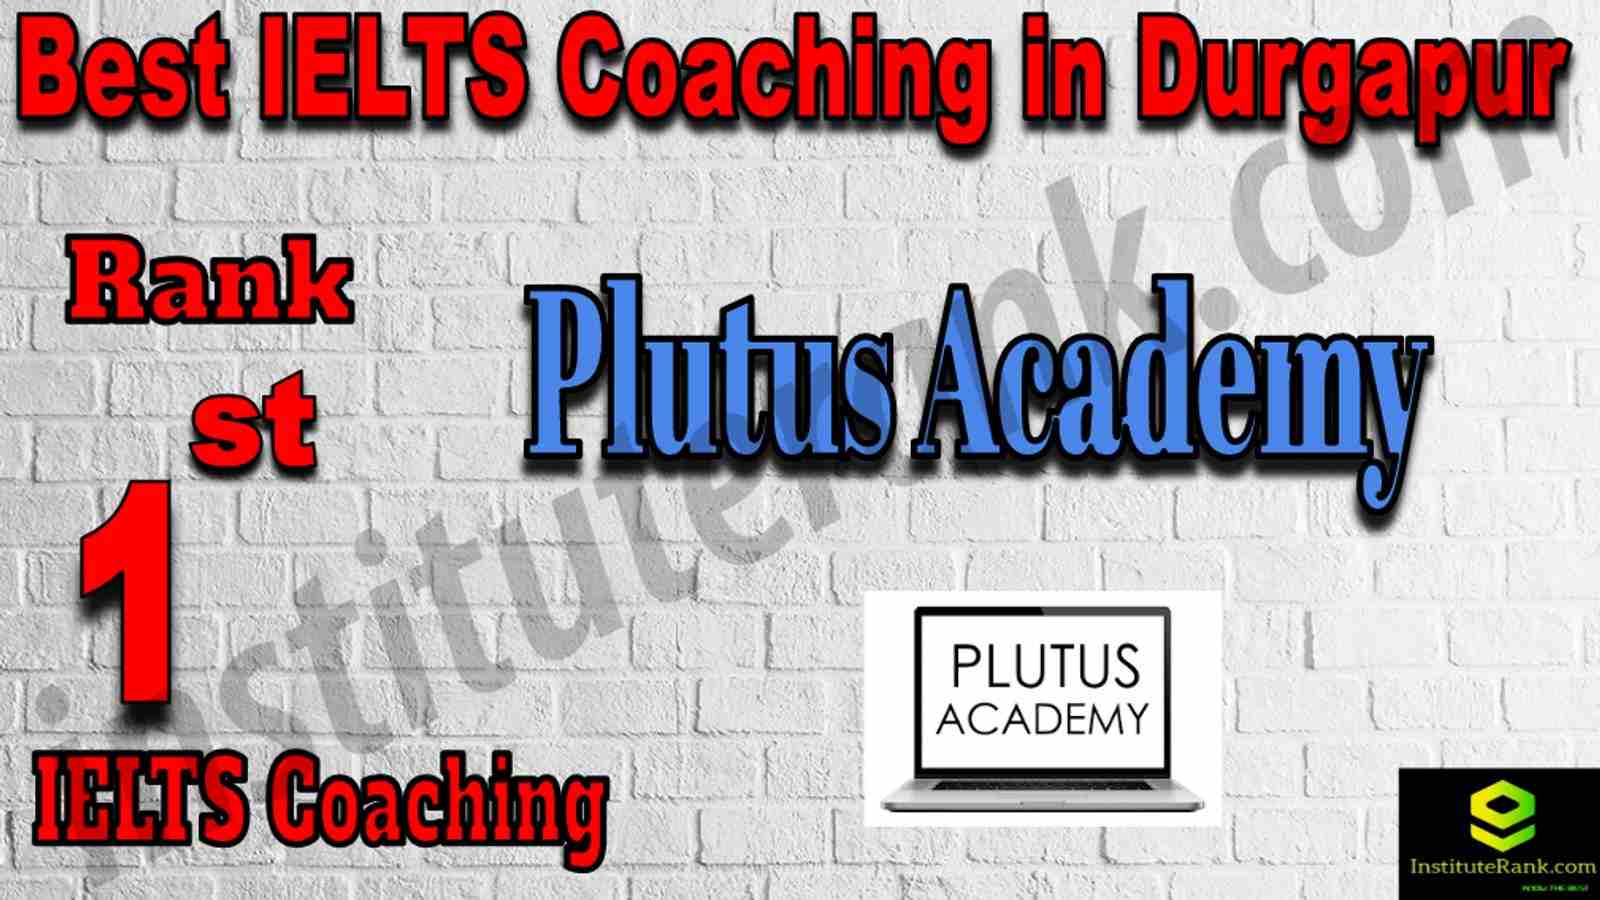 1st Best IELTS Coaching in Durgapur